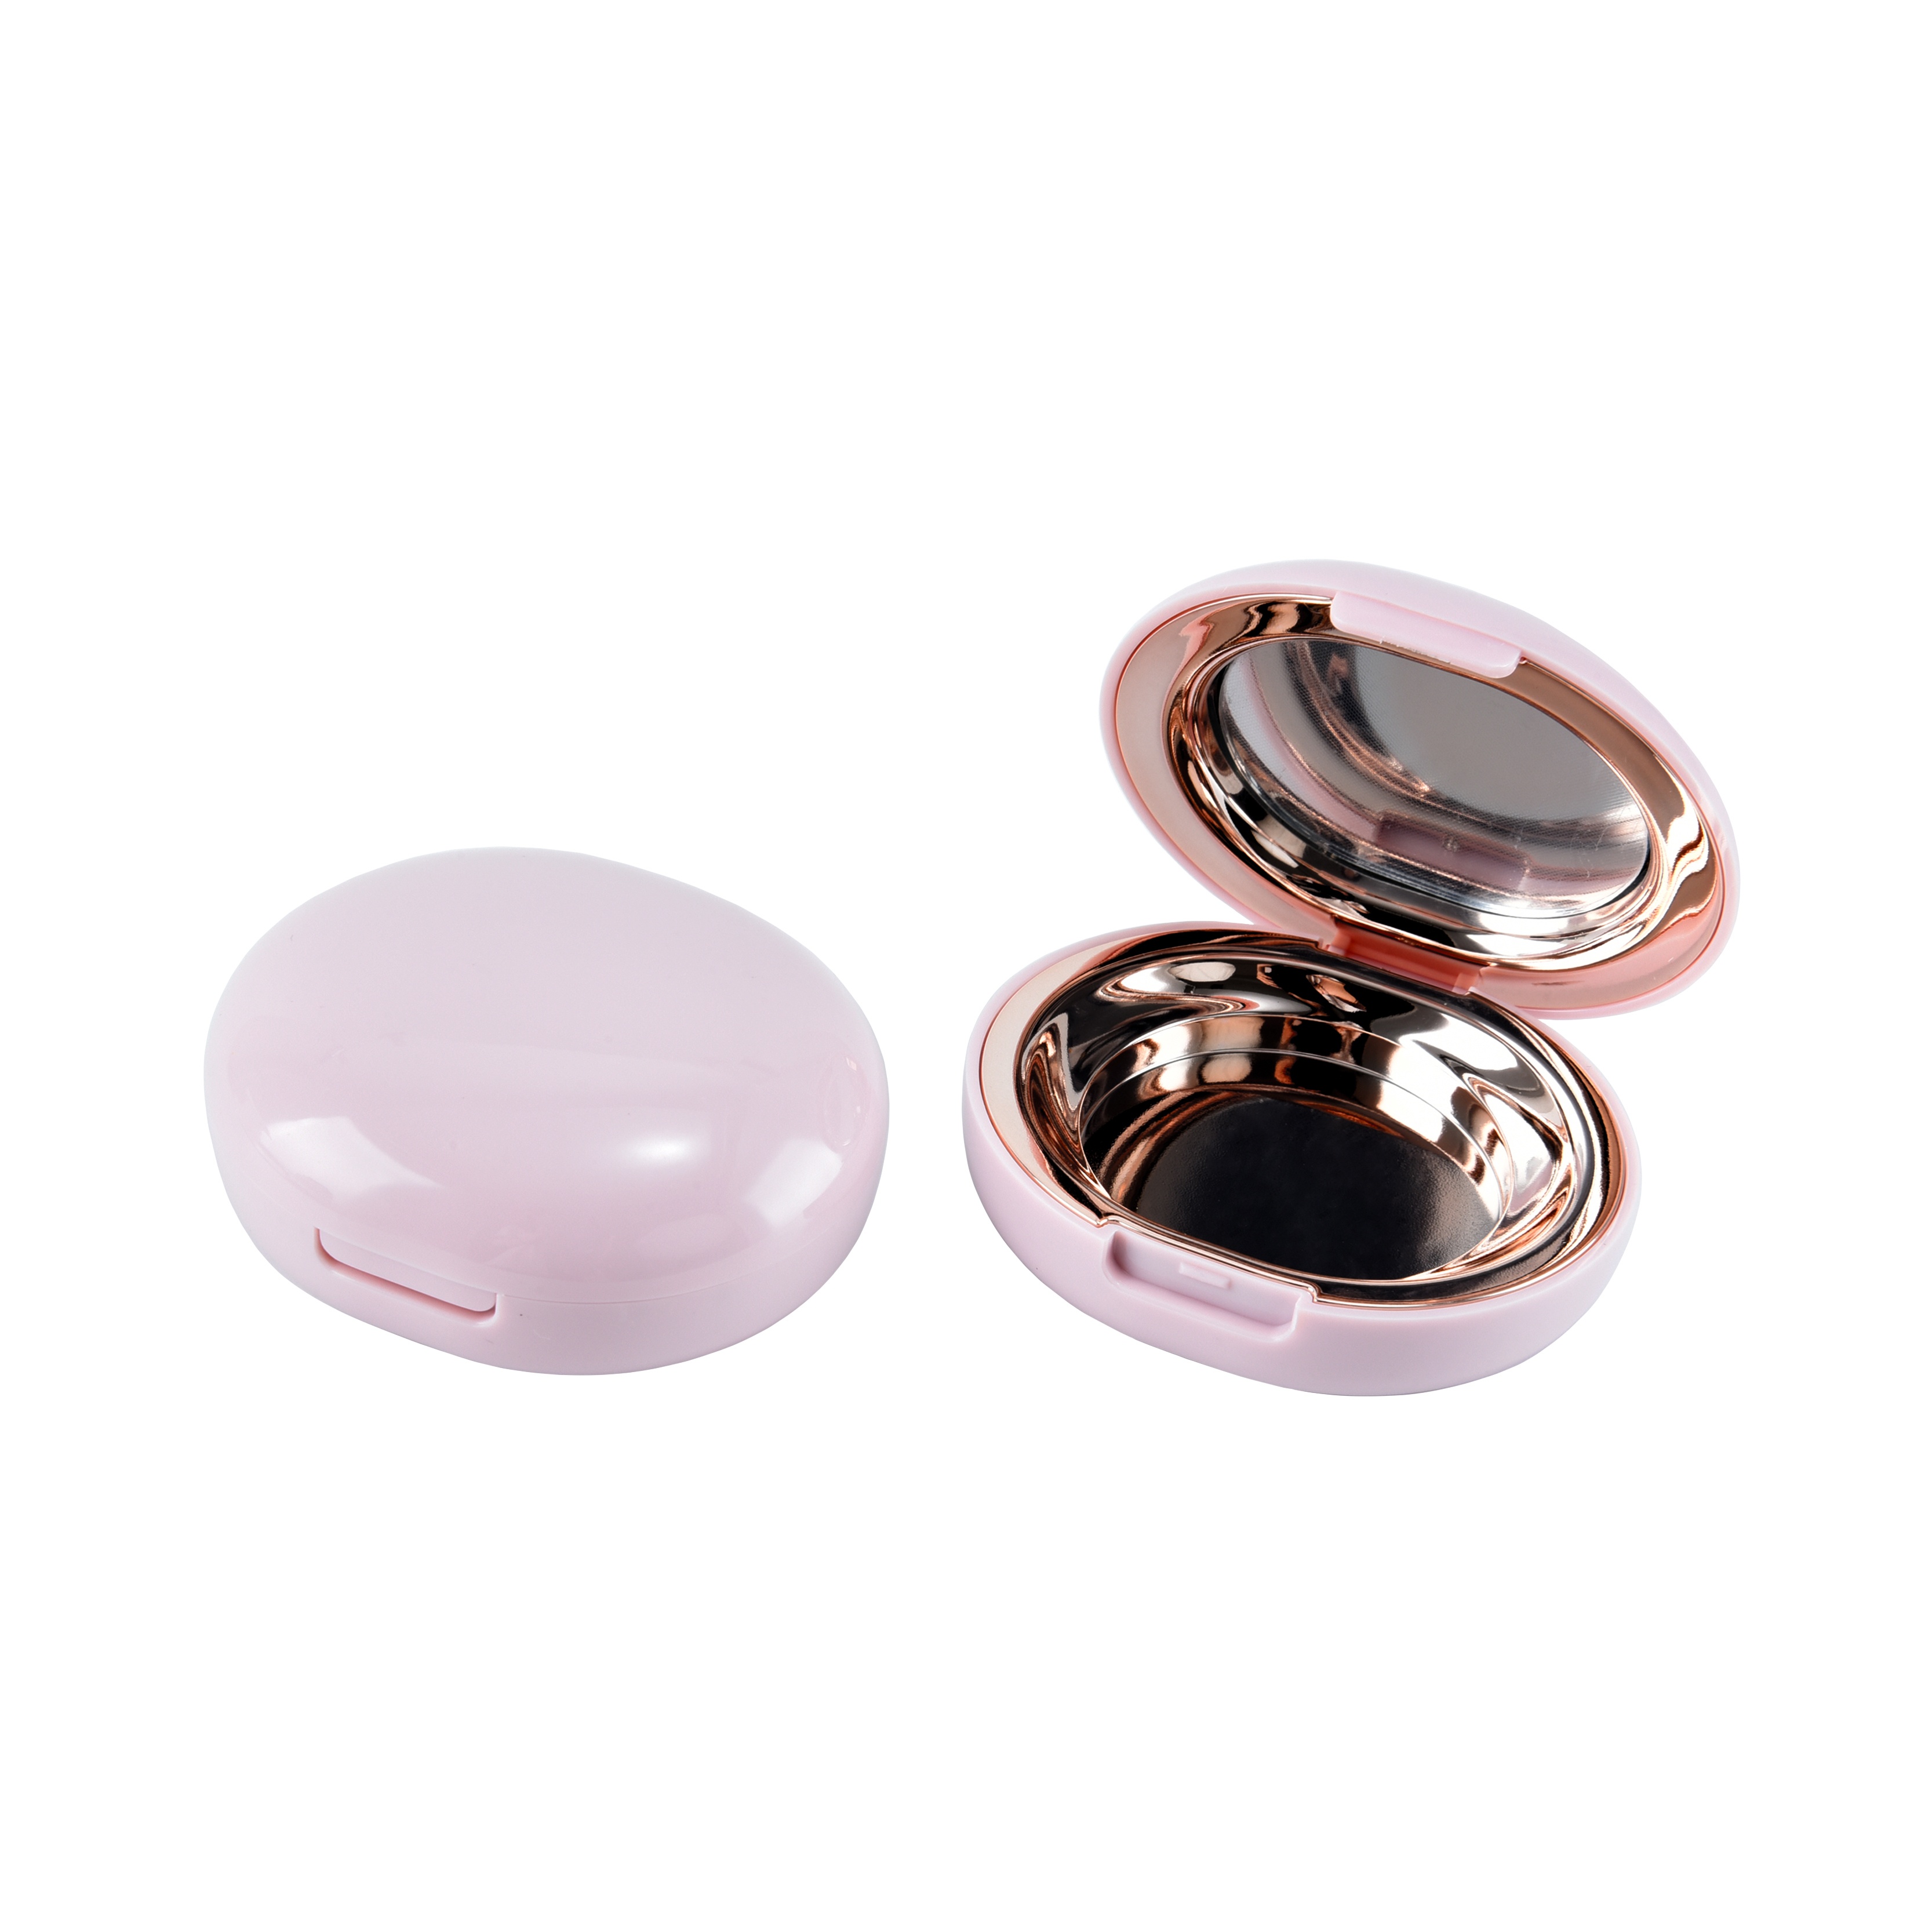 cute pink cream blush case packaging ovul shape